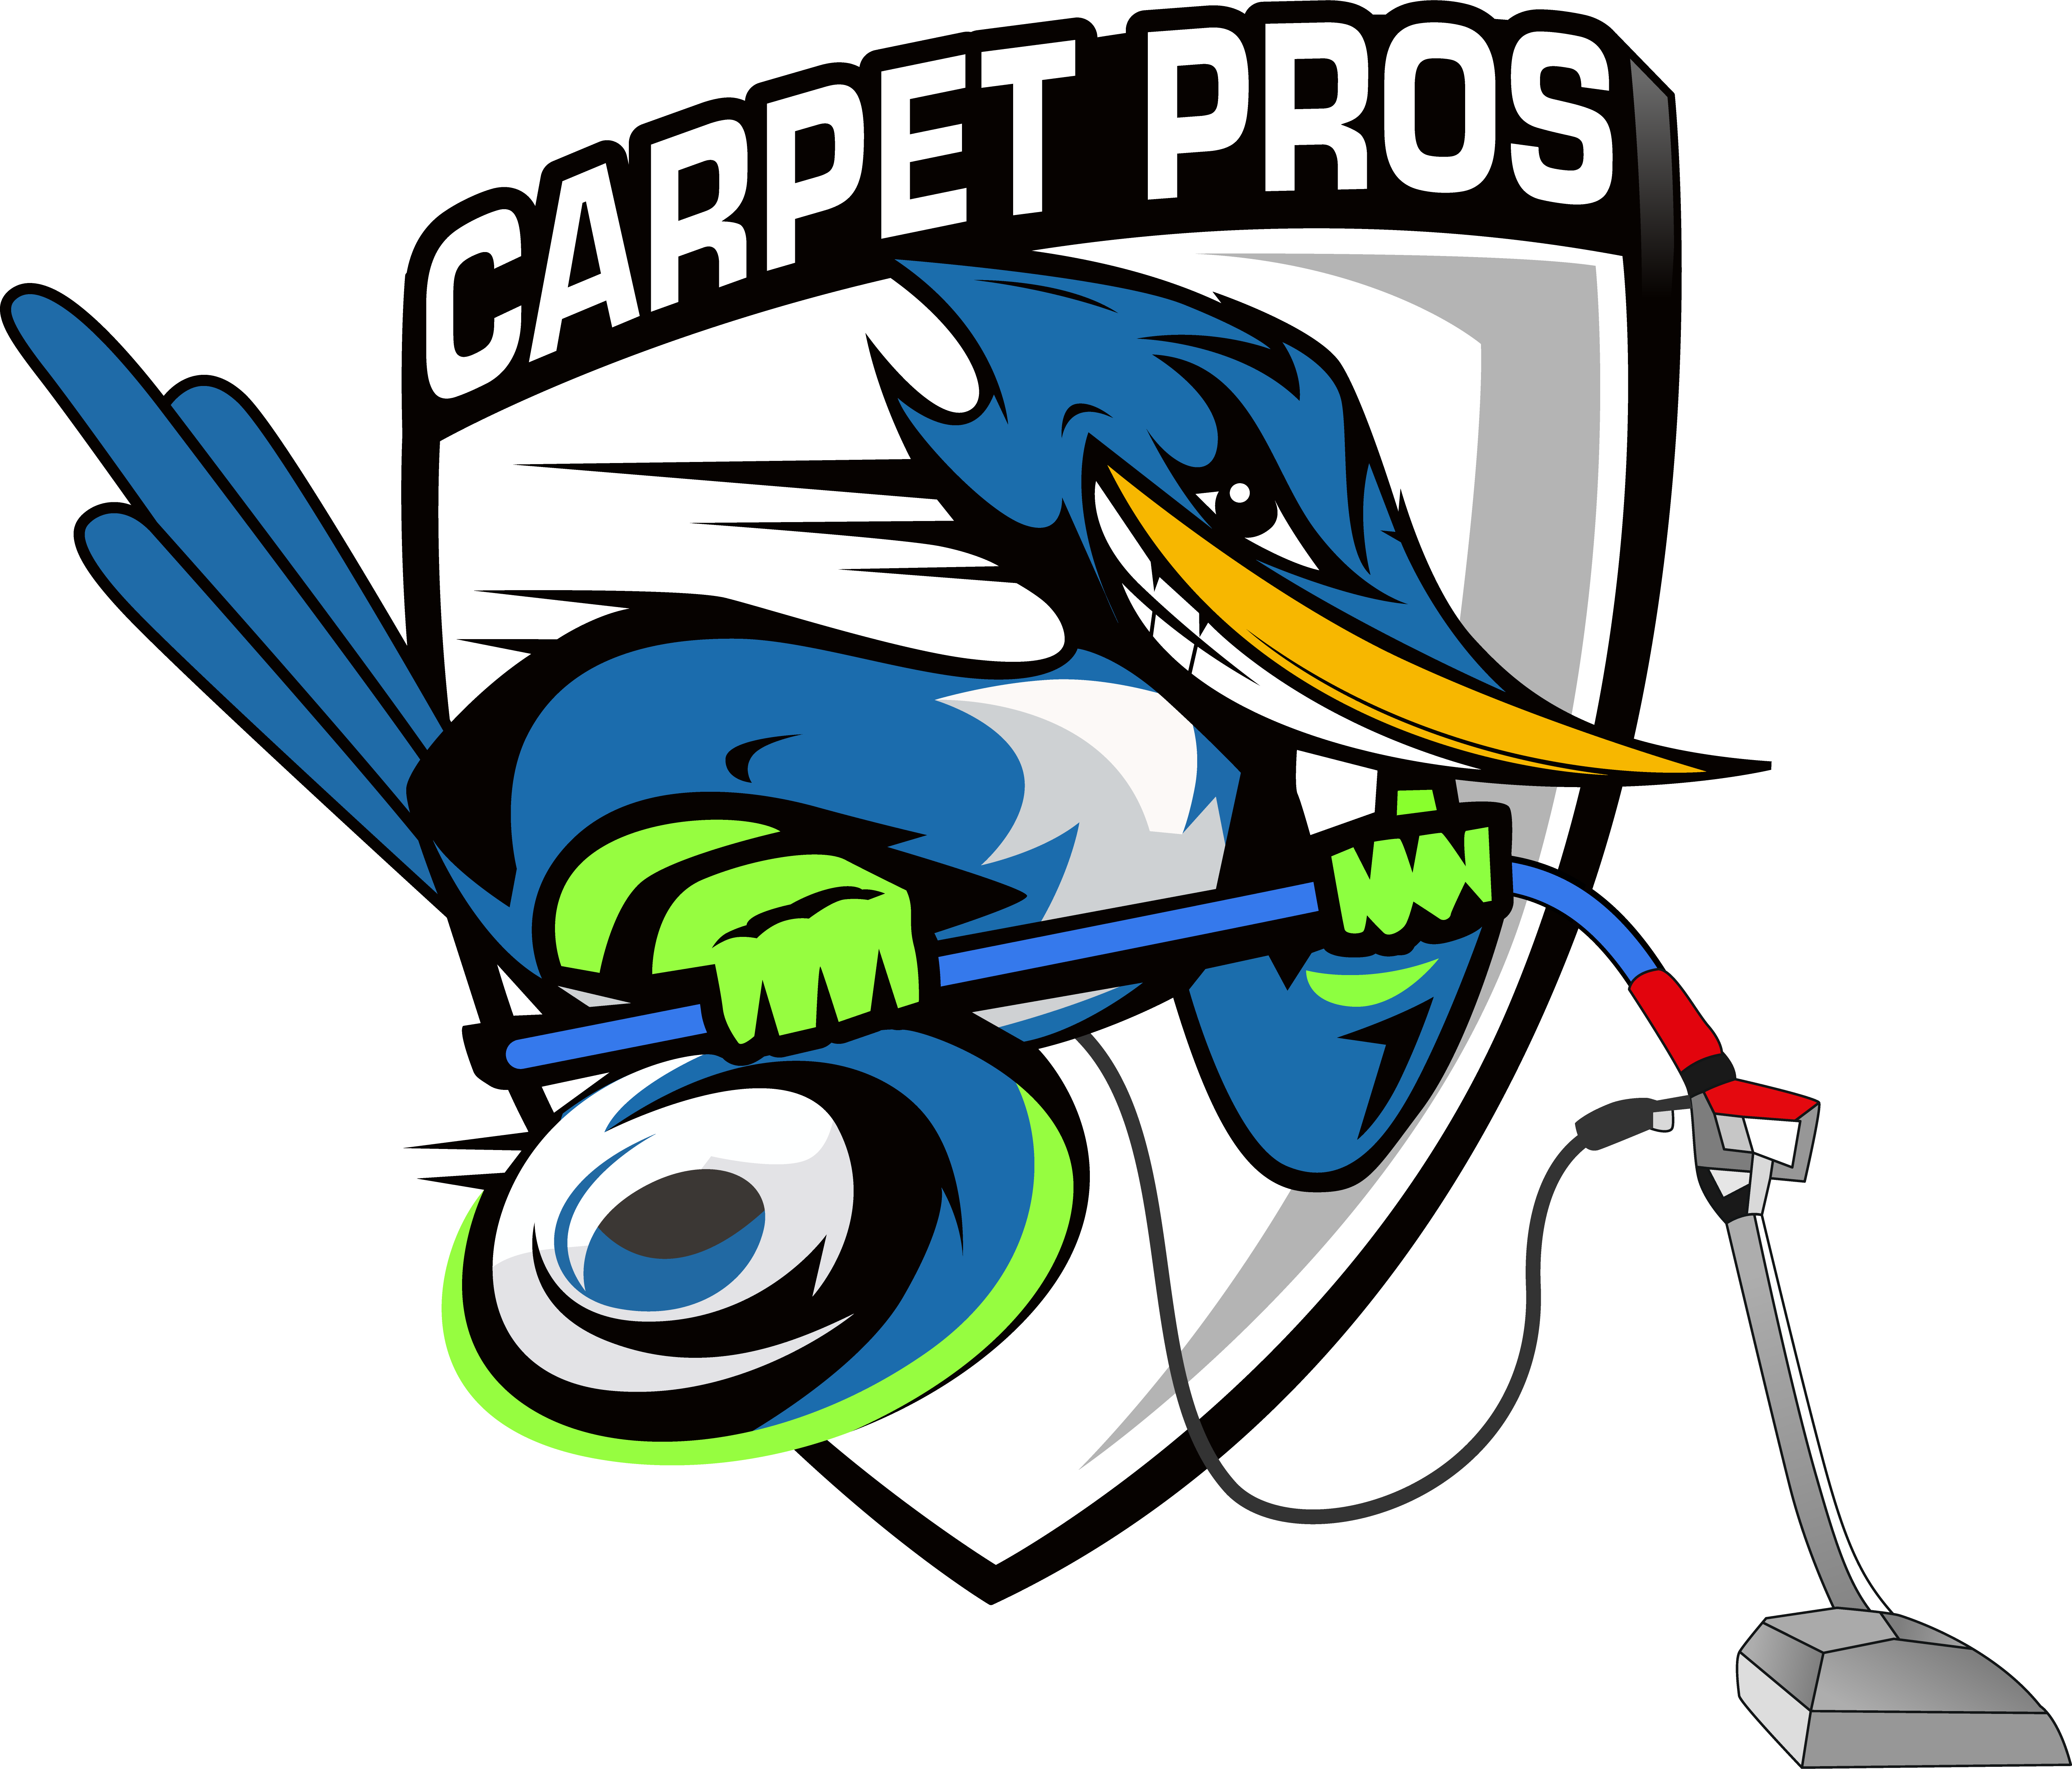 Carpet Pros NW LLC Logo